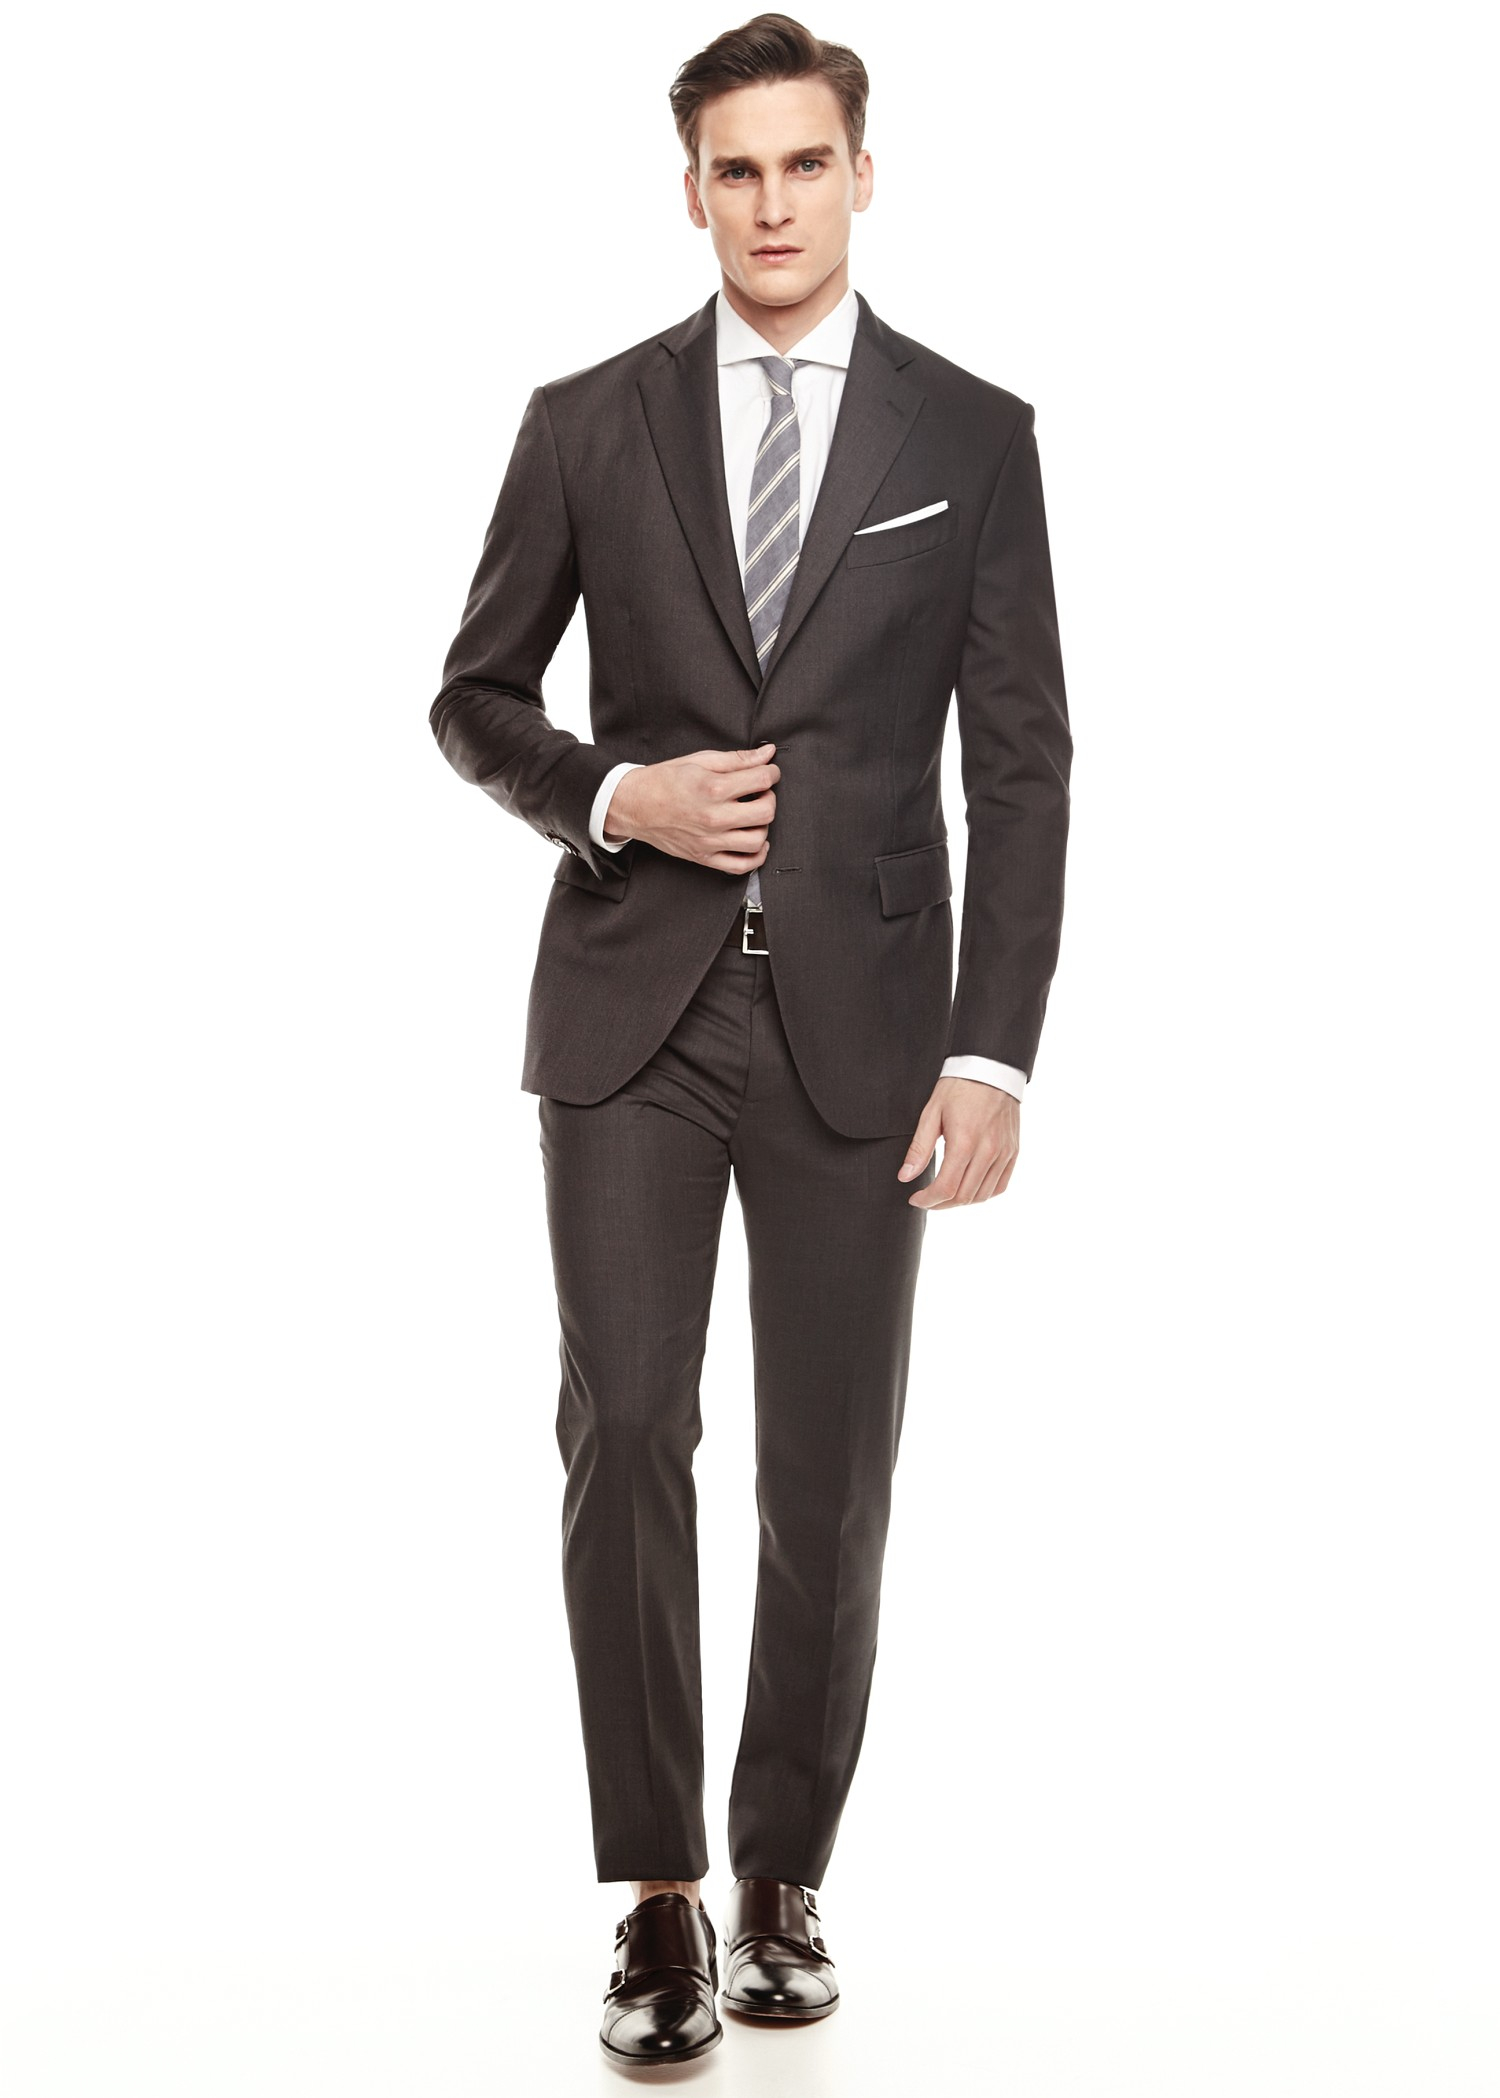 Lyst - Mango Slim Fit Suit Blazer in Gray for Men